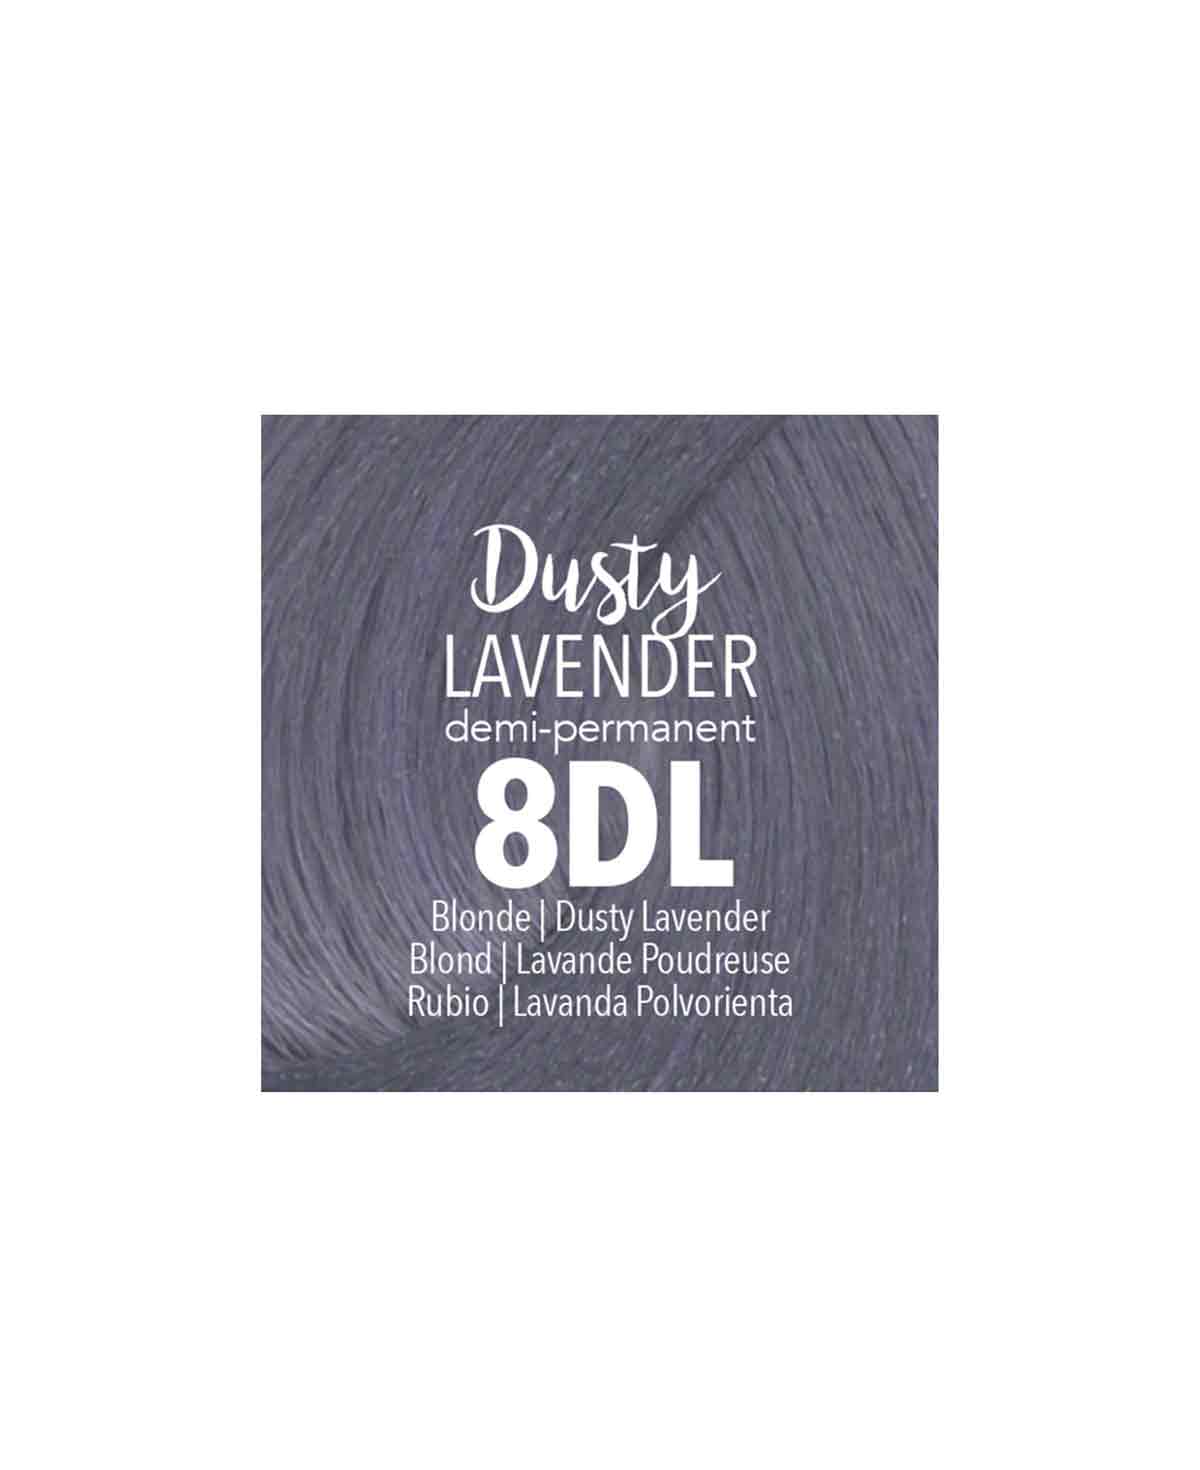 Mydentity - 8DL Blonde Dusty Lavender Demi-P